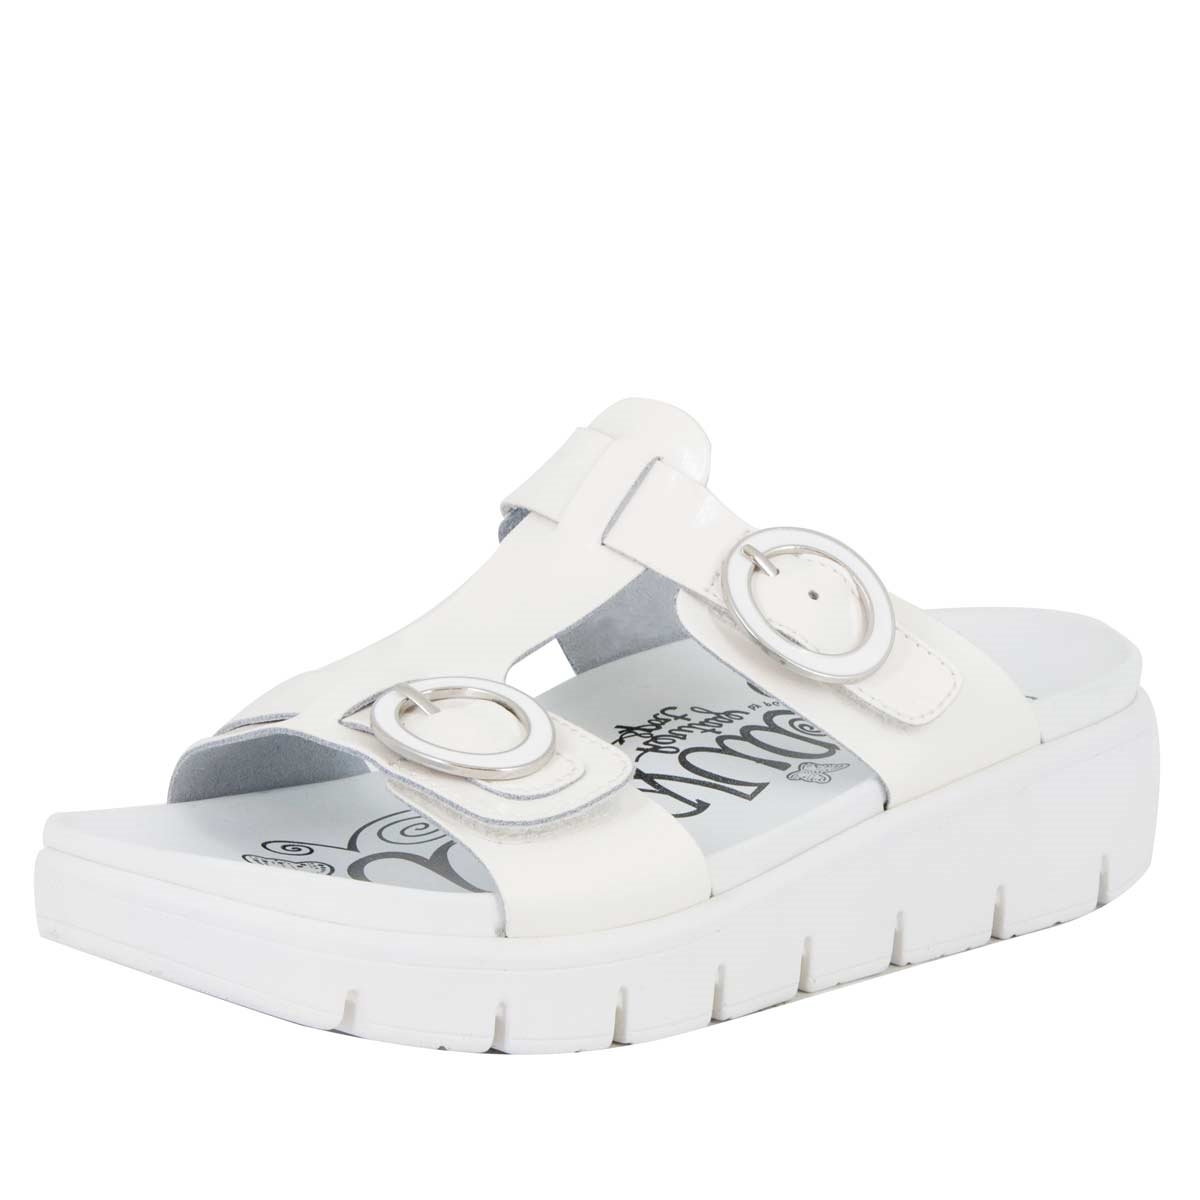 Alegria Shoes - Vita Duo White Patent